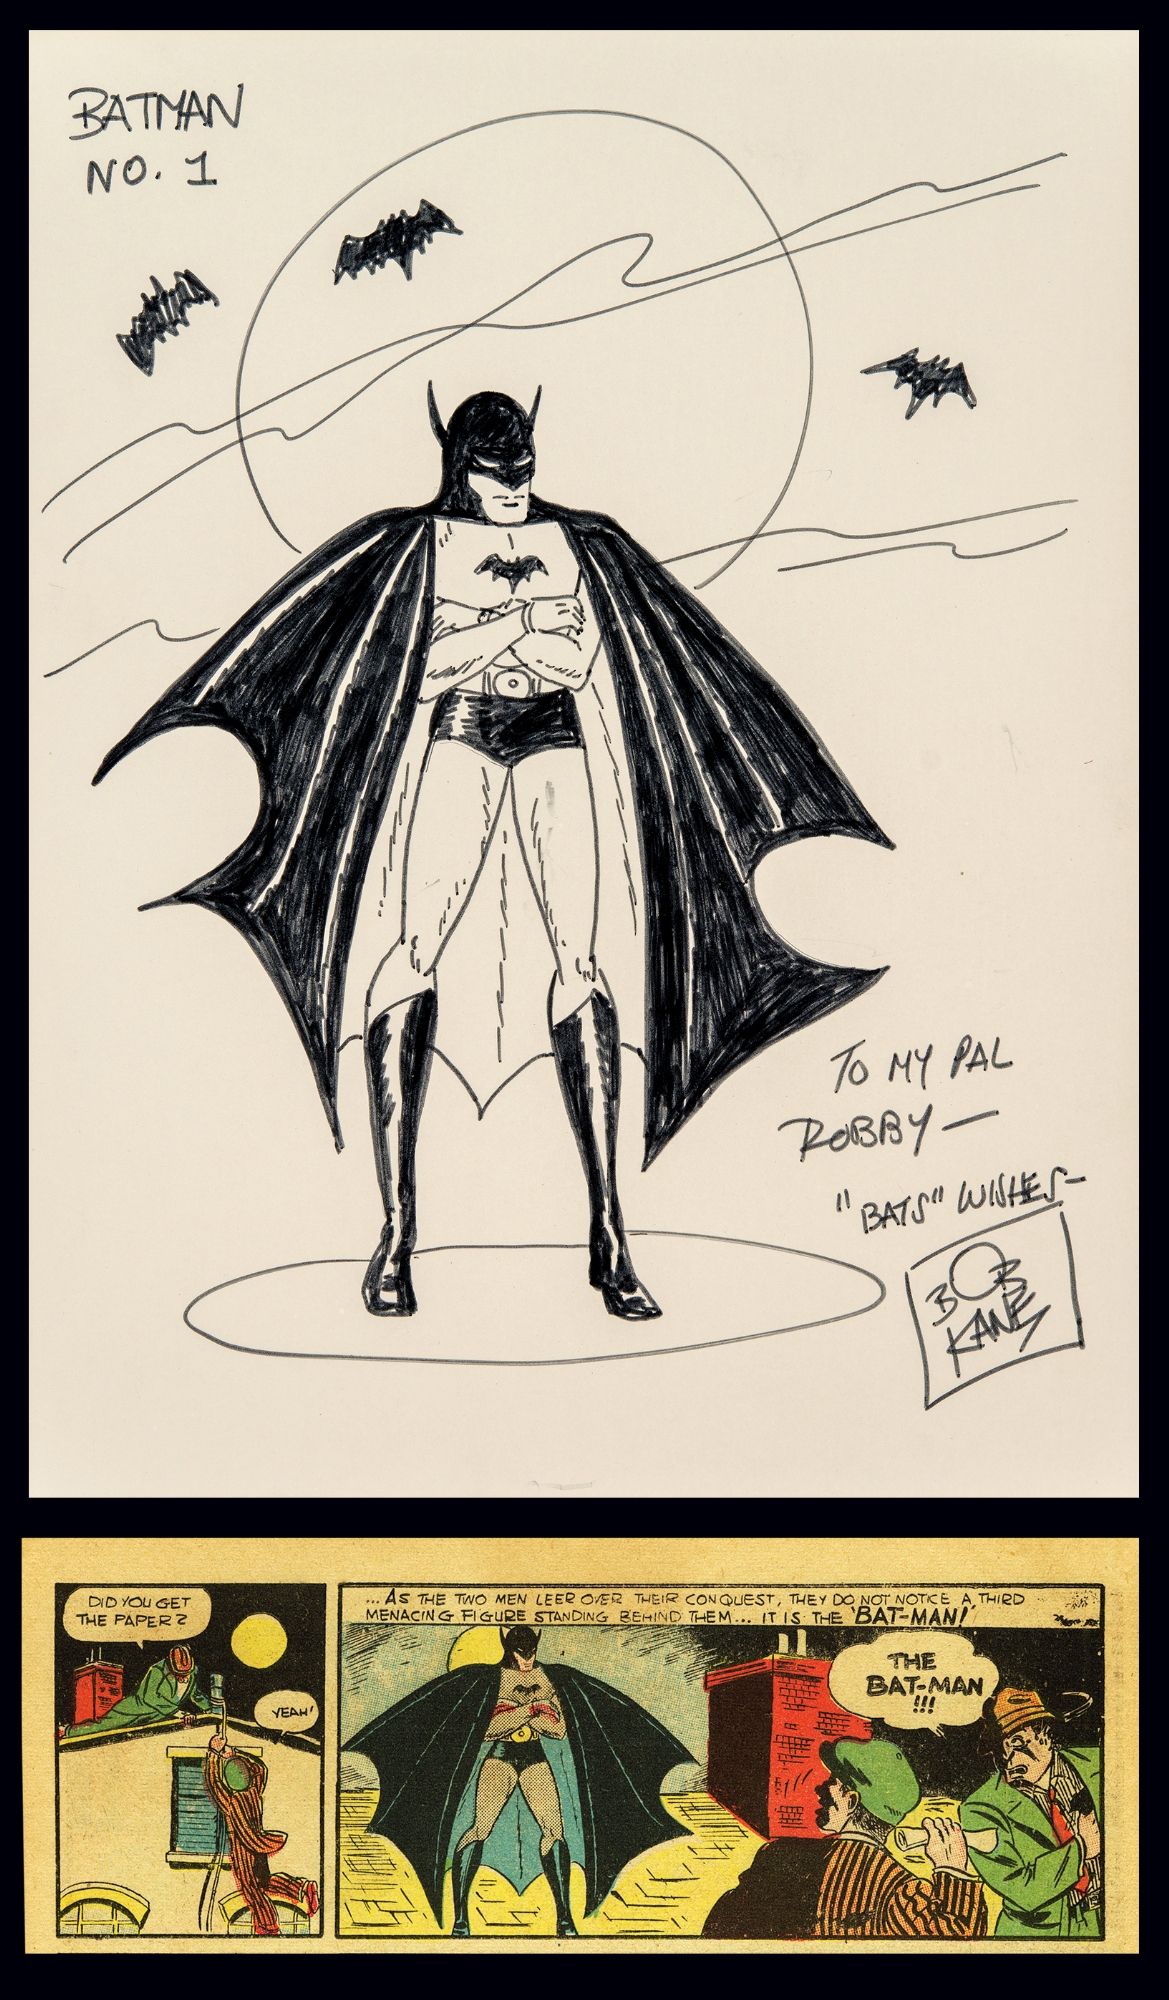 DETECTIVE COMICS #27 BATMAN ART by BOB KANE, in Rob Hughes's Artwork -  Personal Collection Comic Art Gallery Room